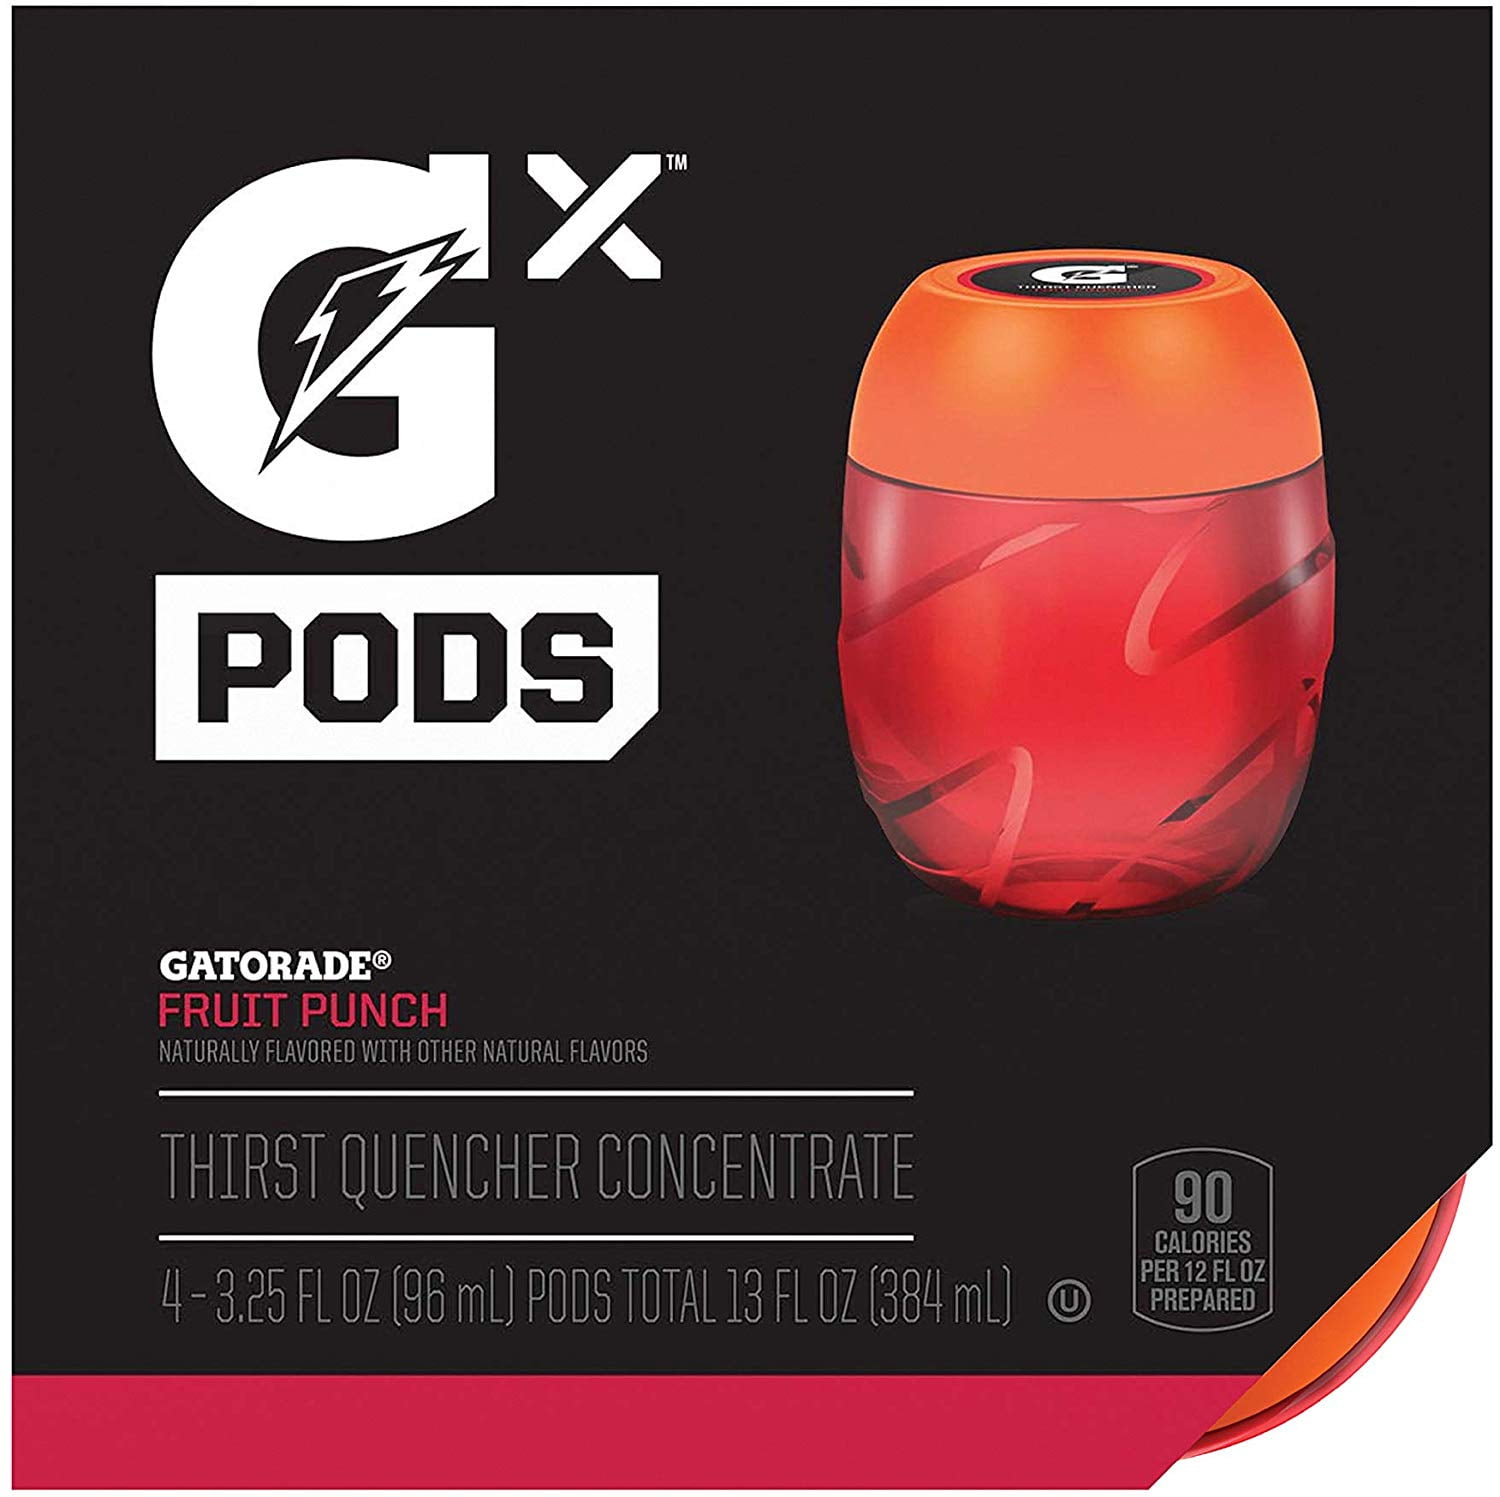 gx bottle pods